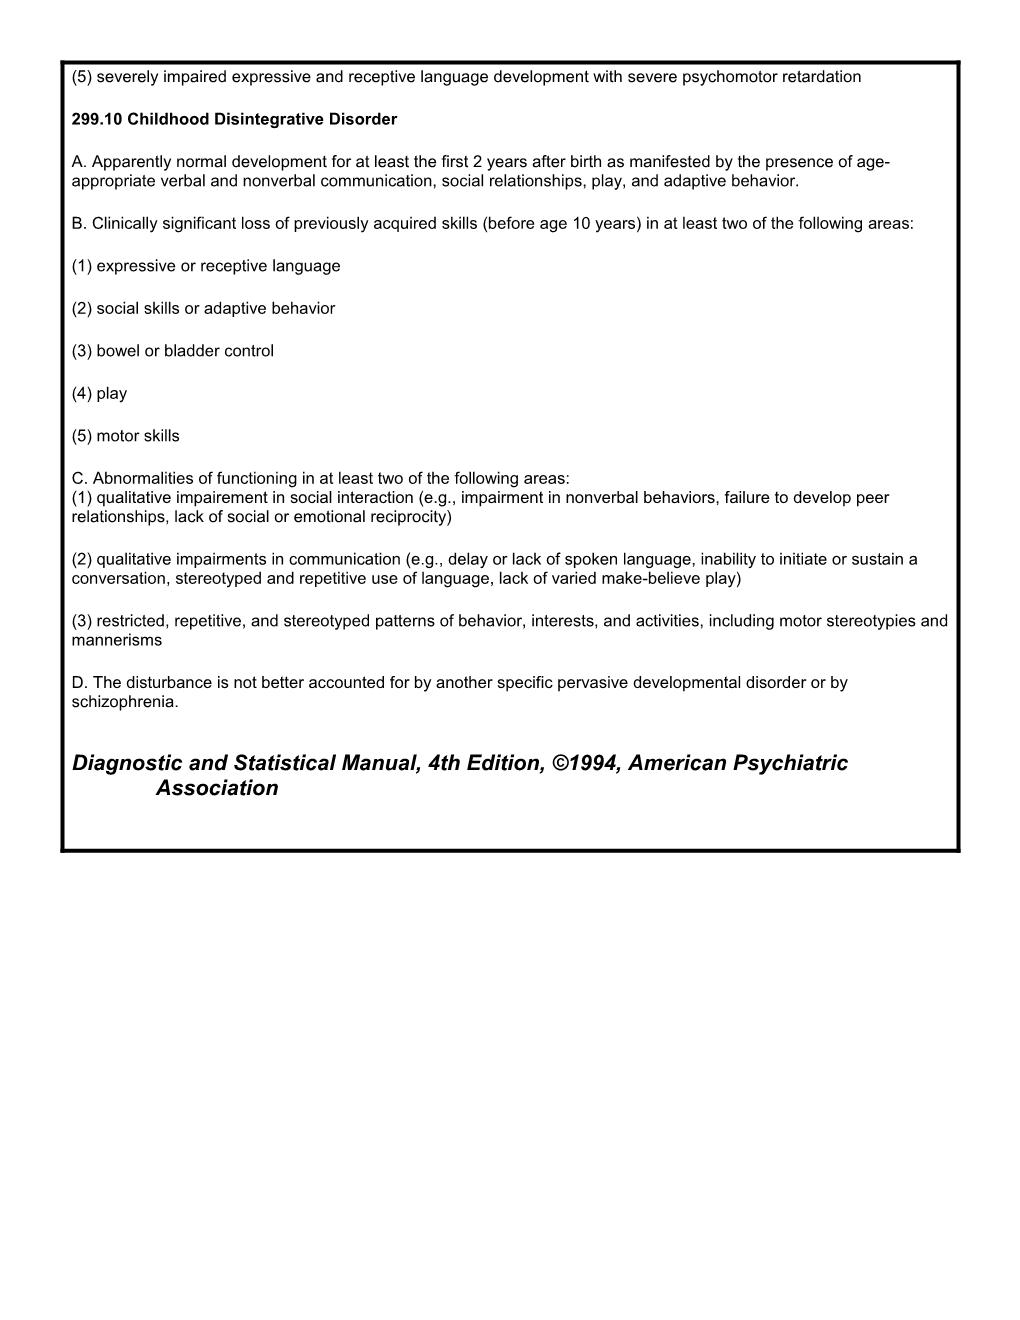 DSM-IV Criteria, Pervasive Developmental Disorders